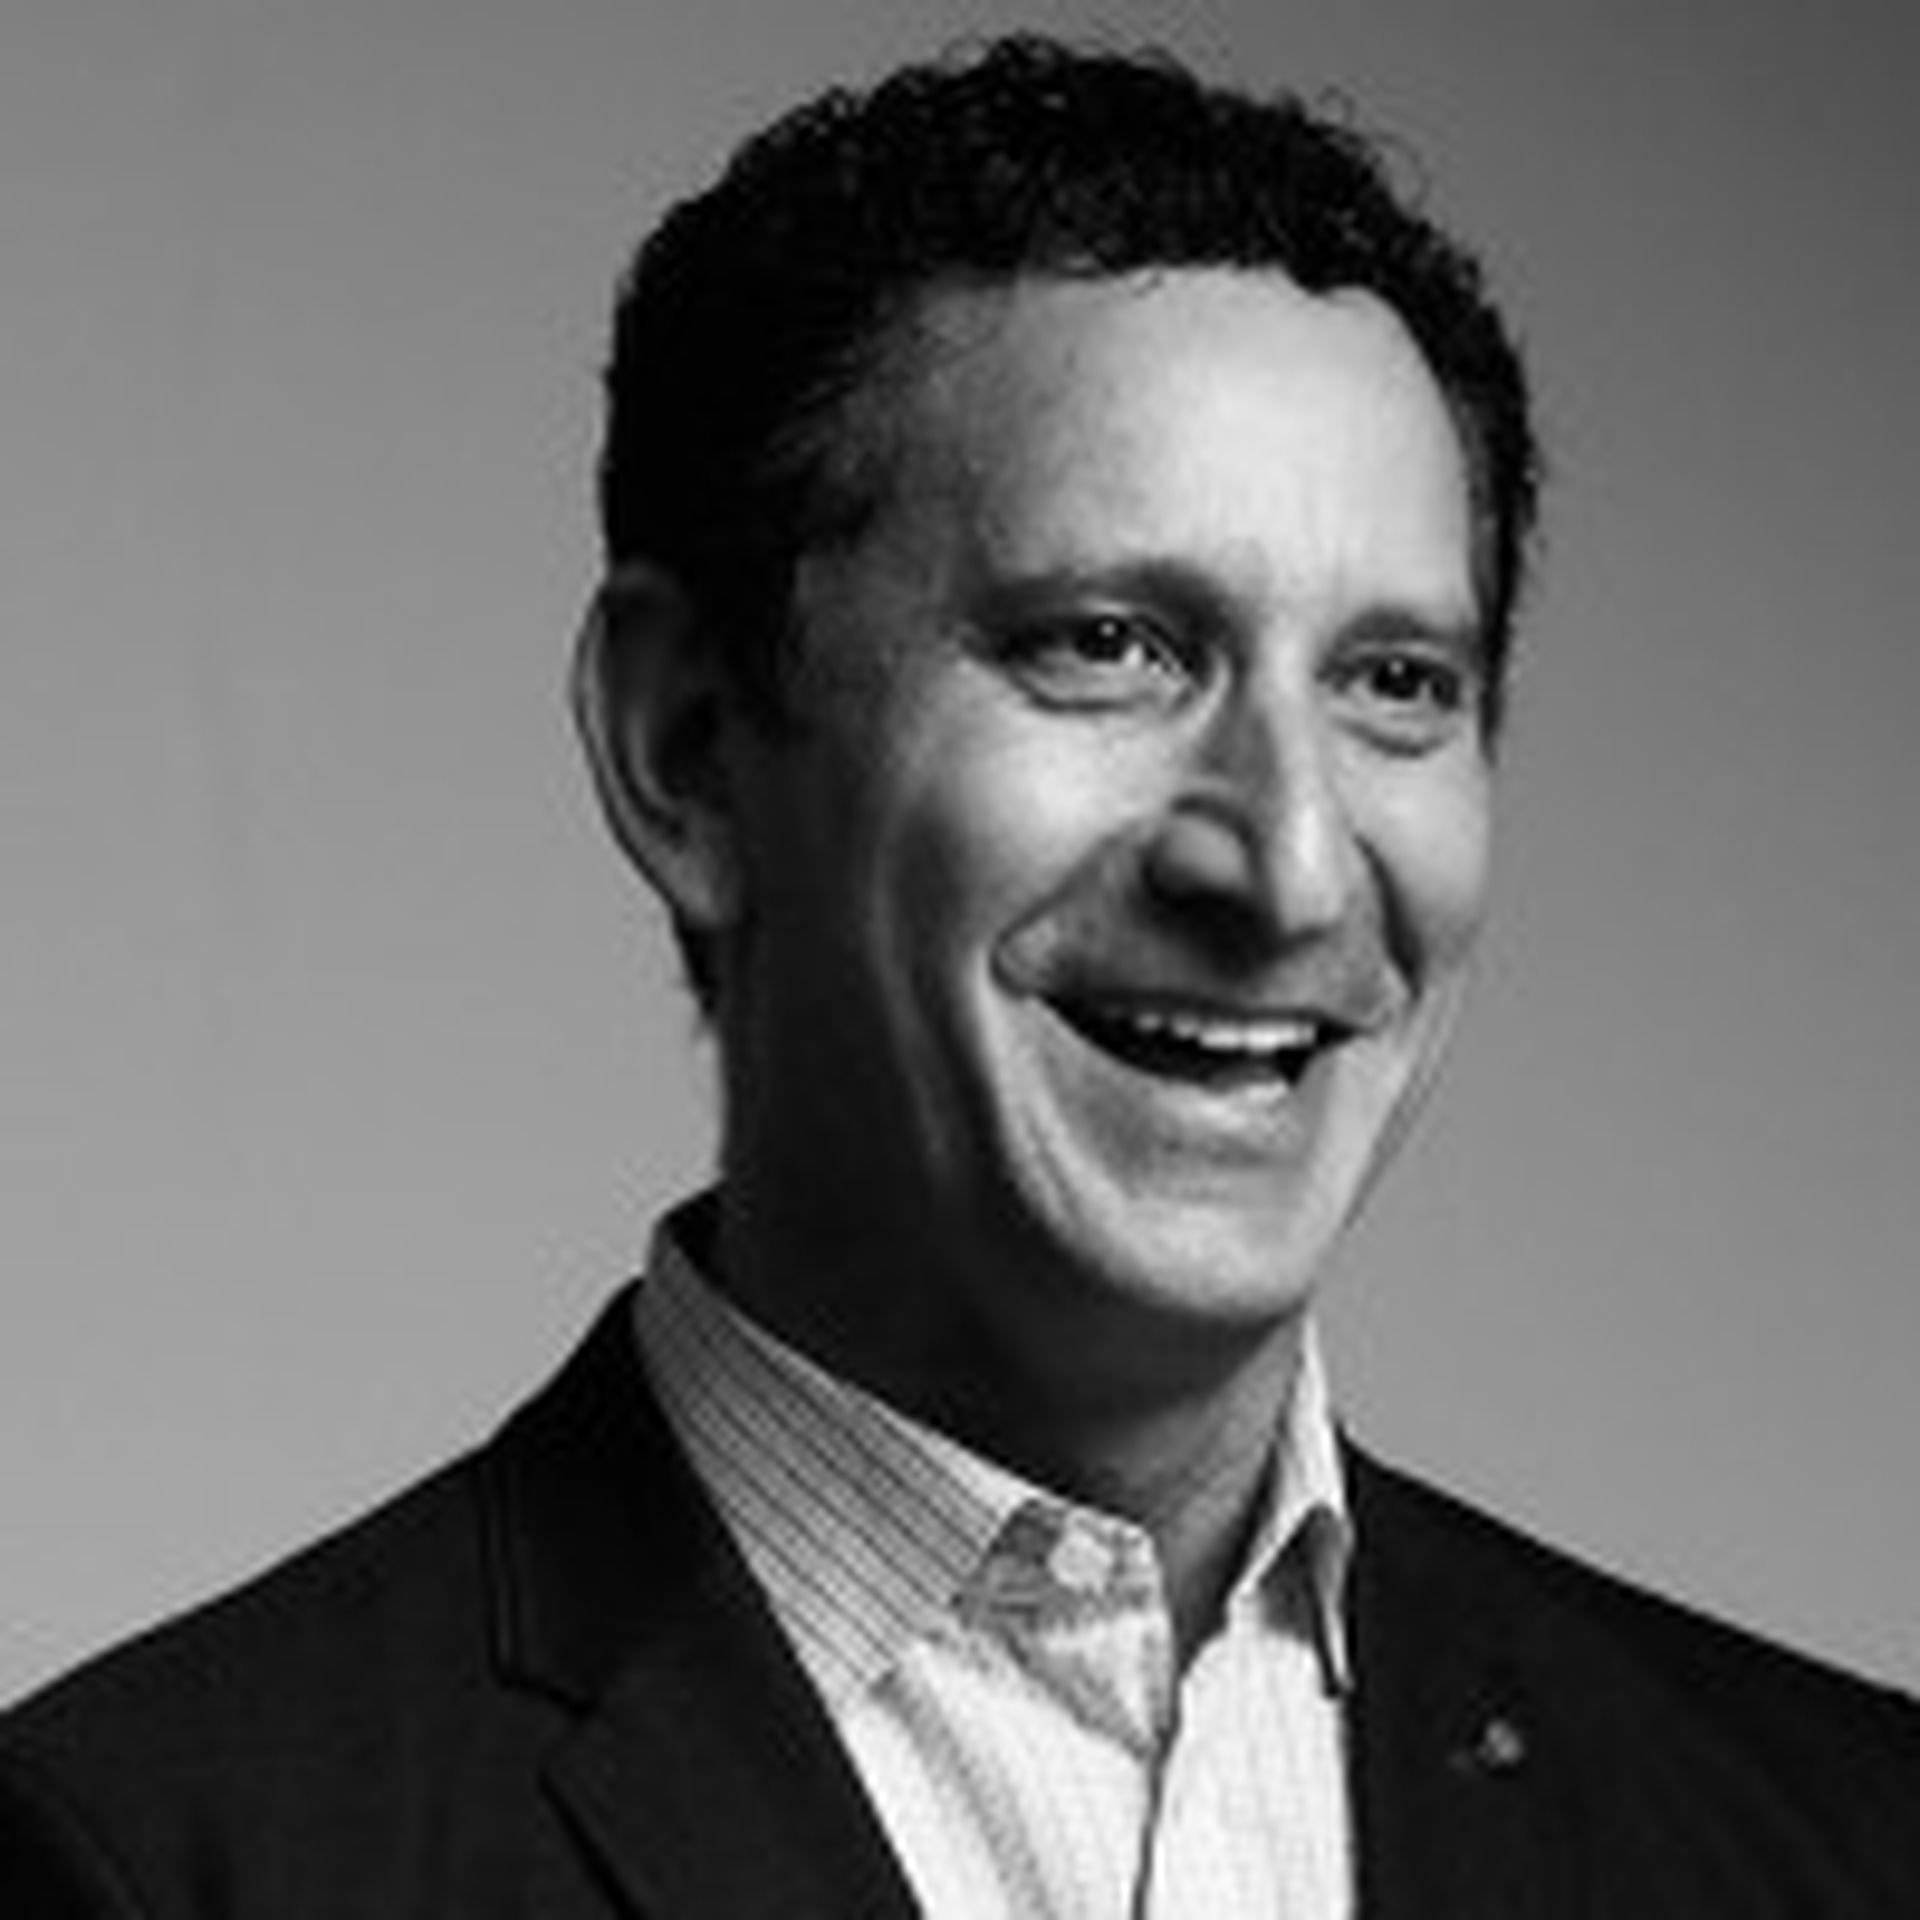 Jonathan Lerner, CEO, InterVision